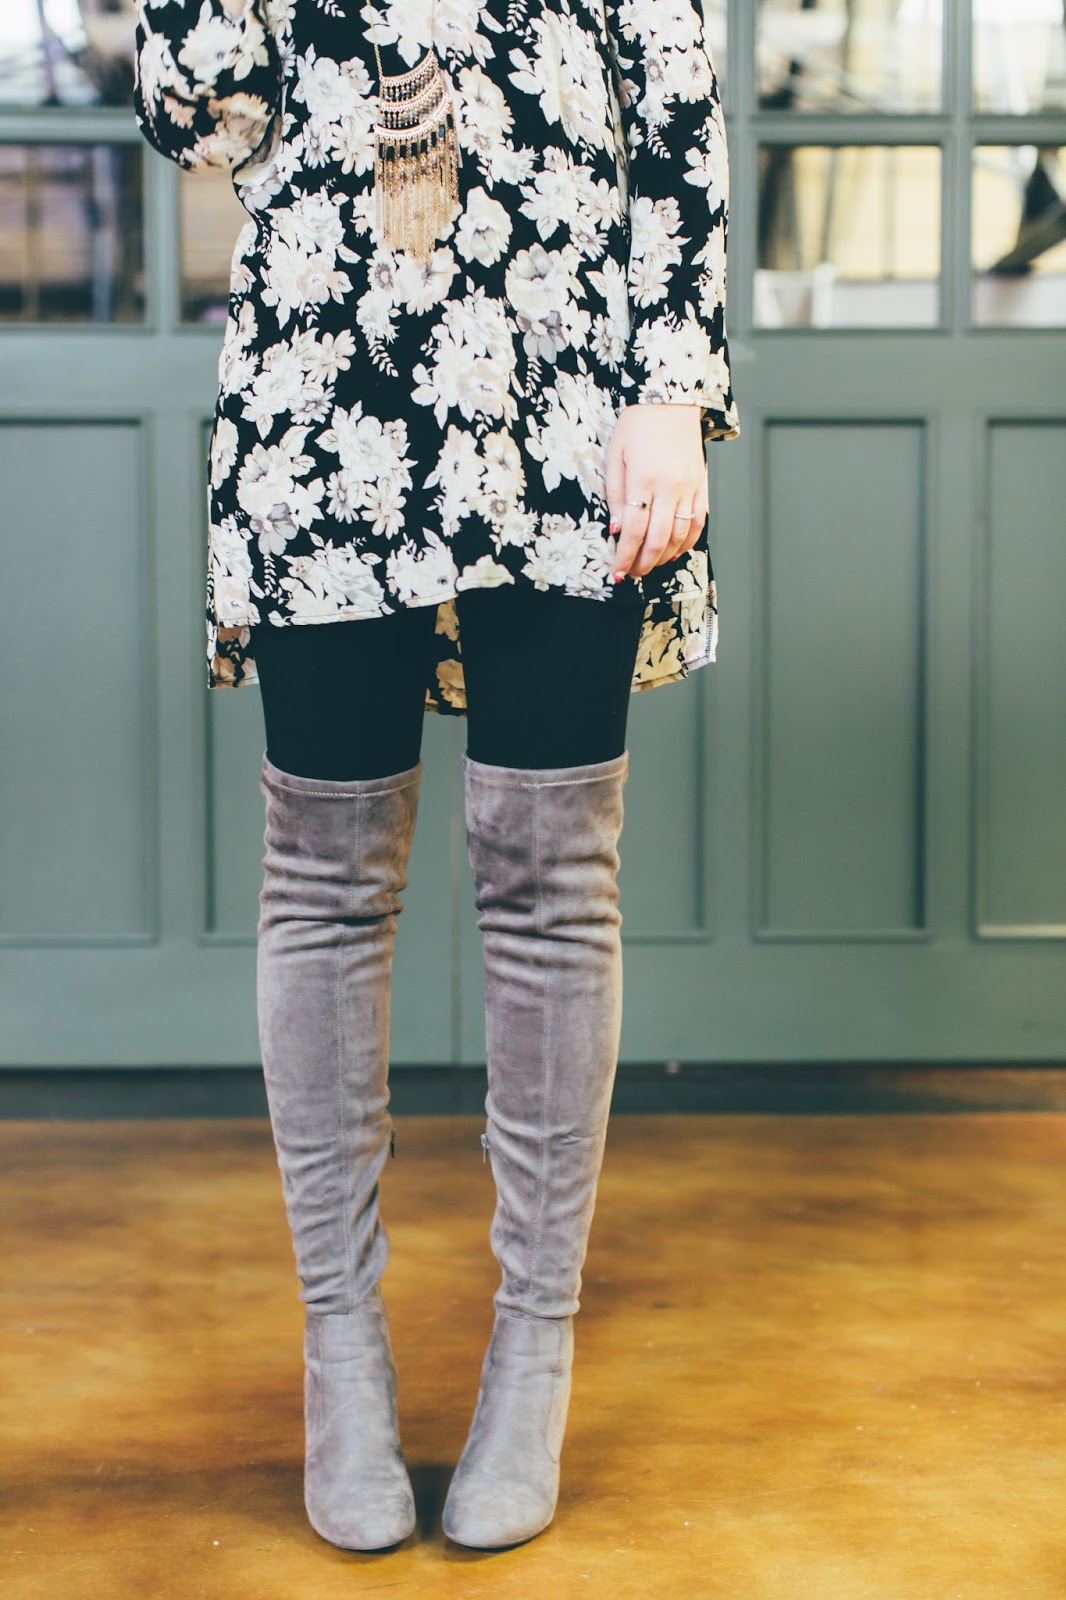 Thigh High Boots, Floral Tunic, Utah Fashion Blogger